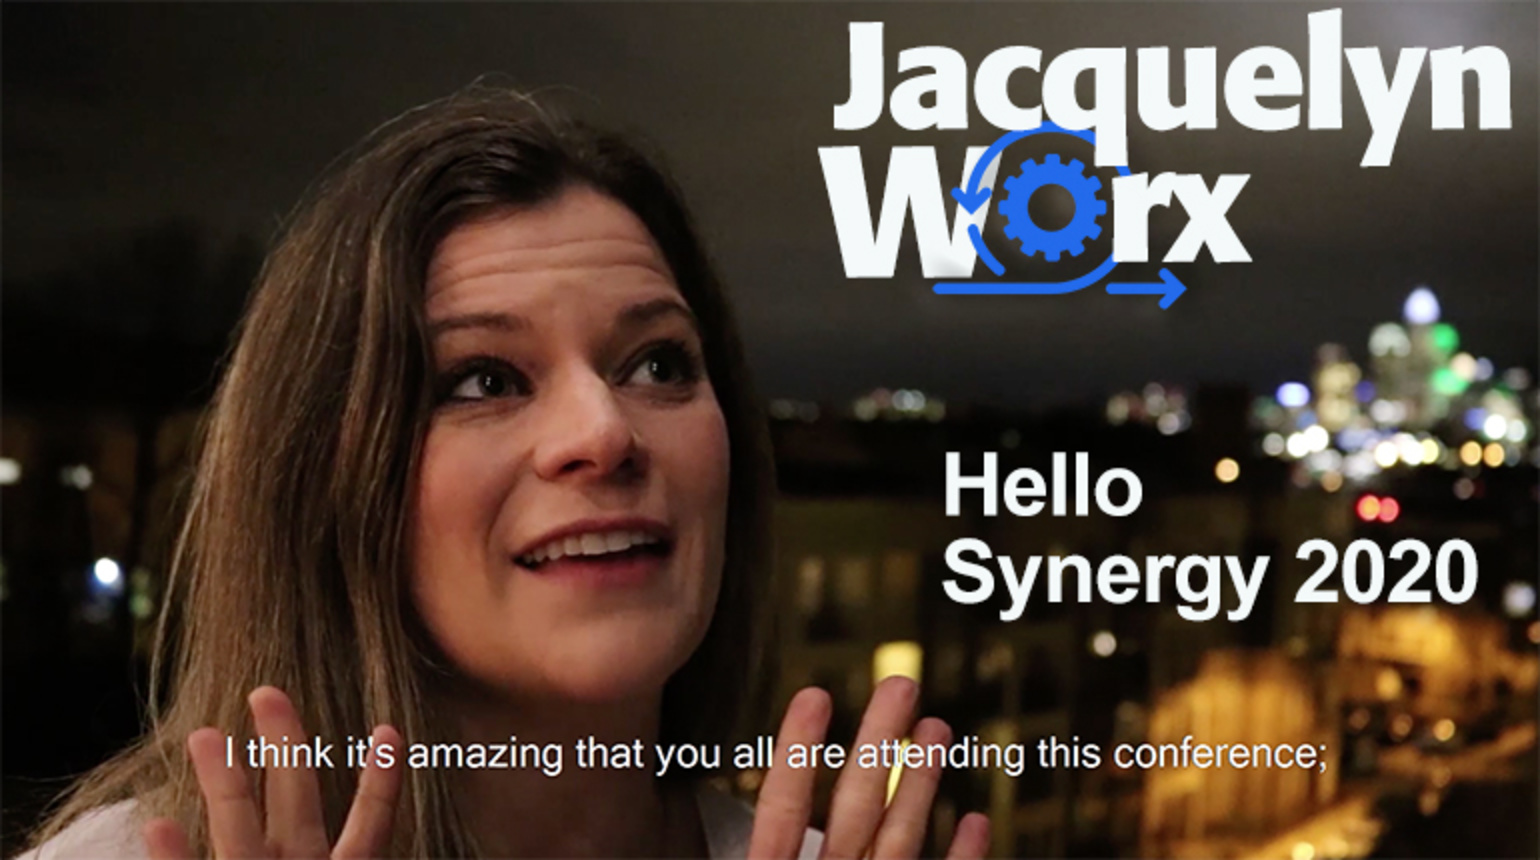 Jacquelyn Worx: Hello Synergy 2020